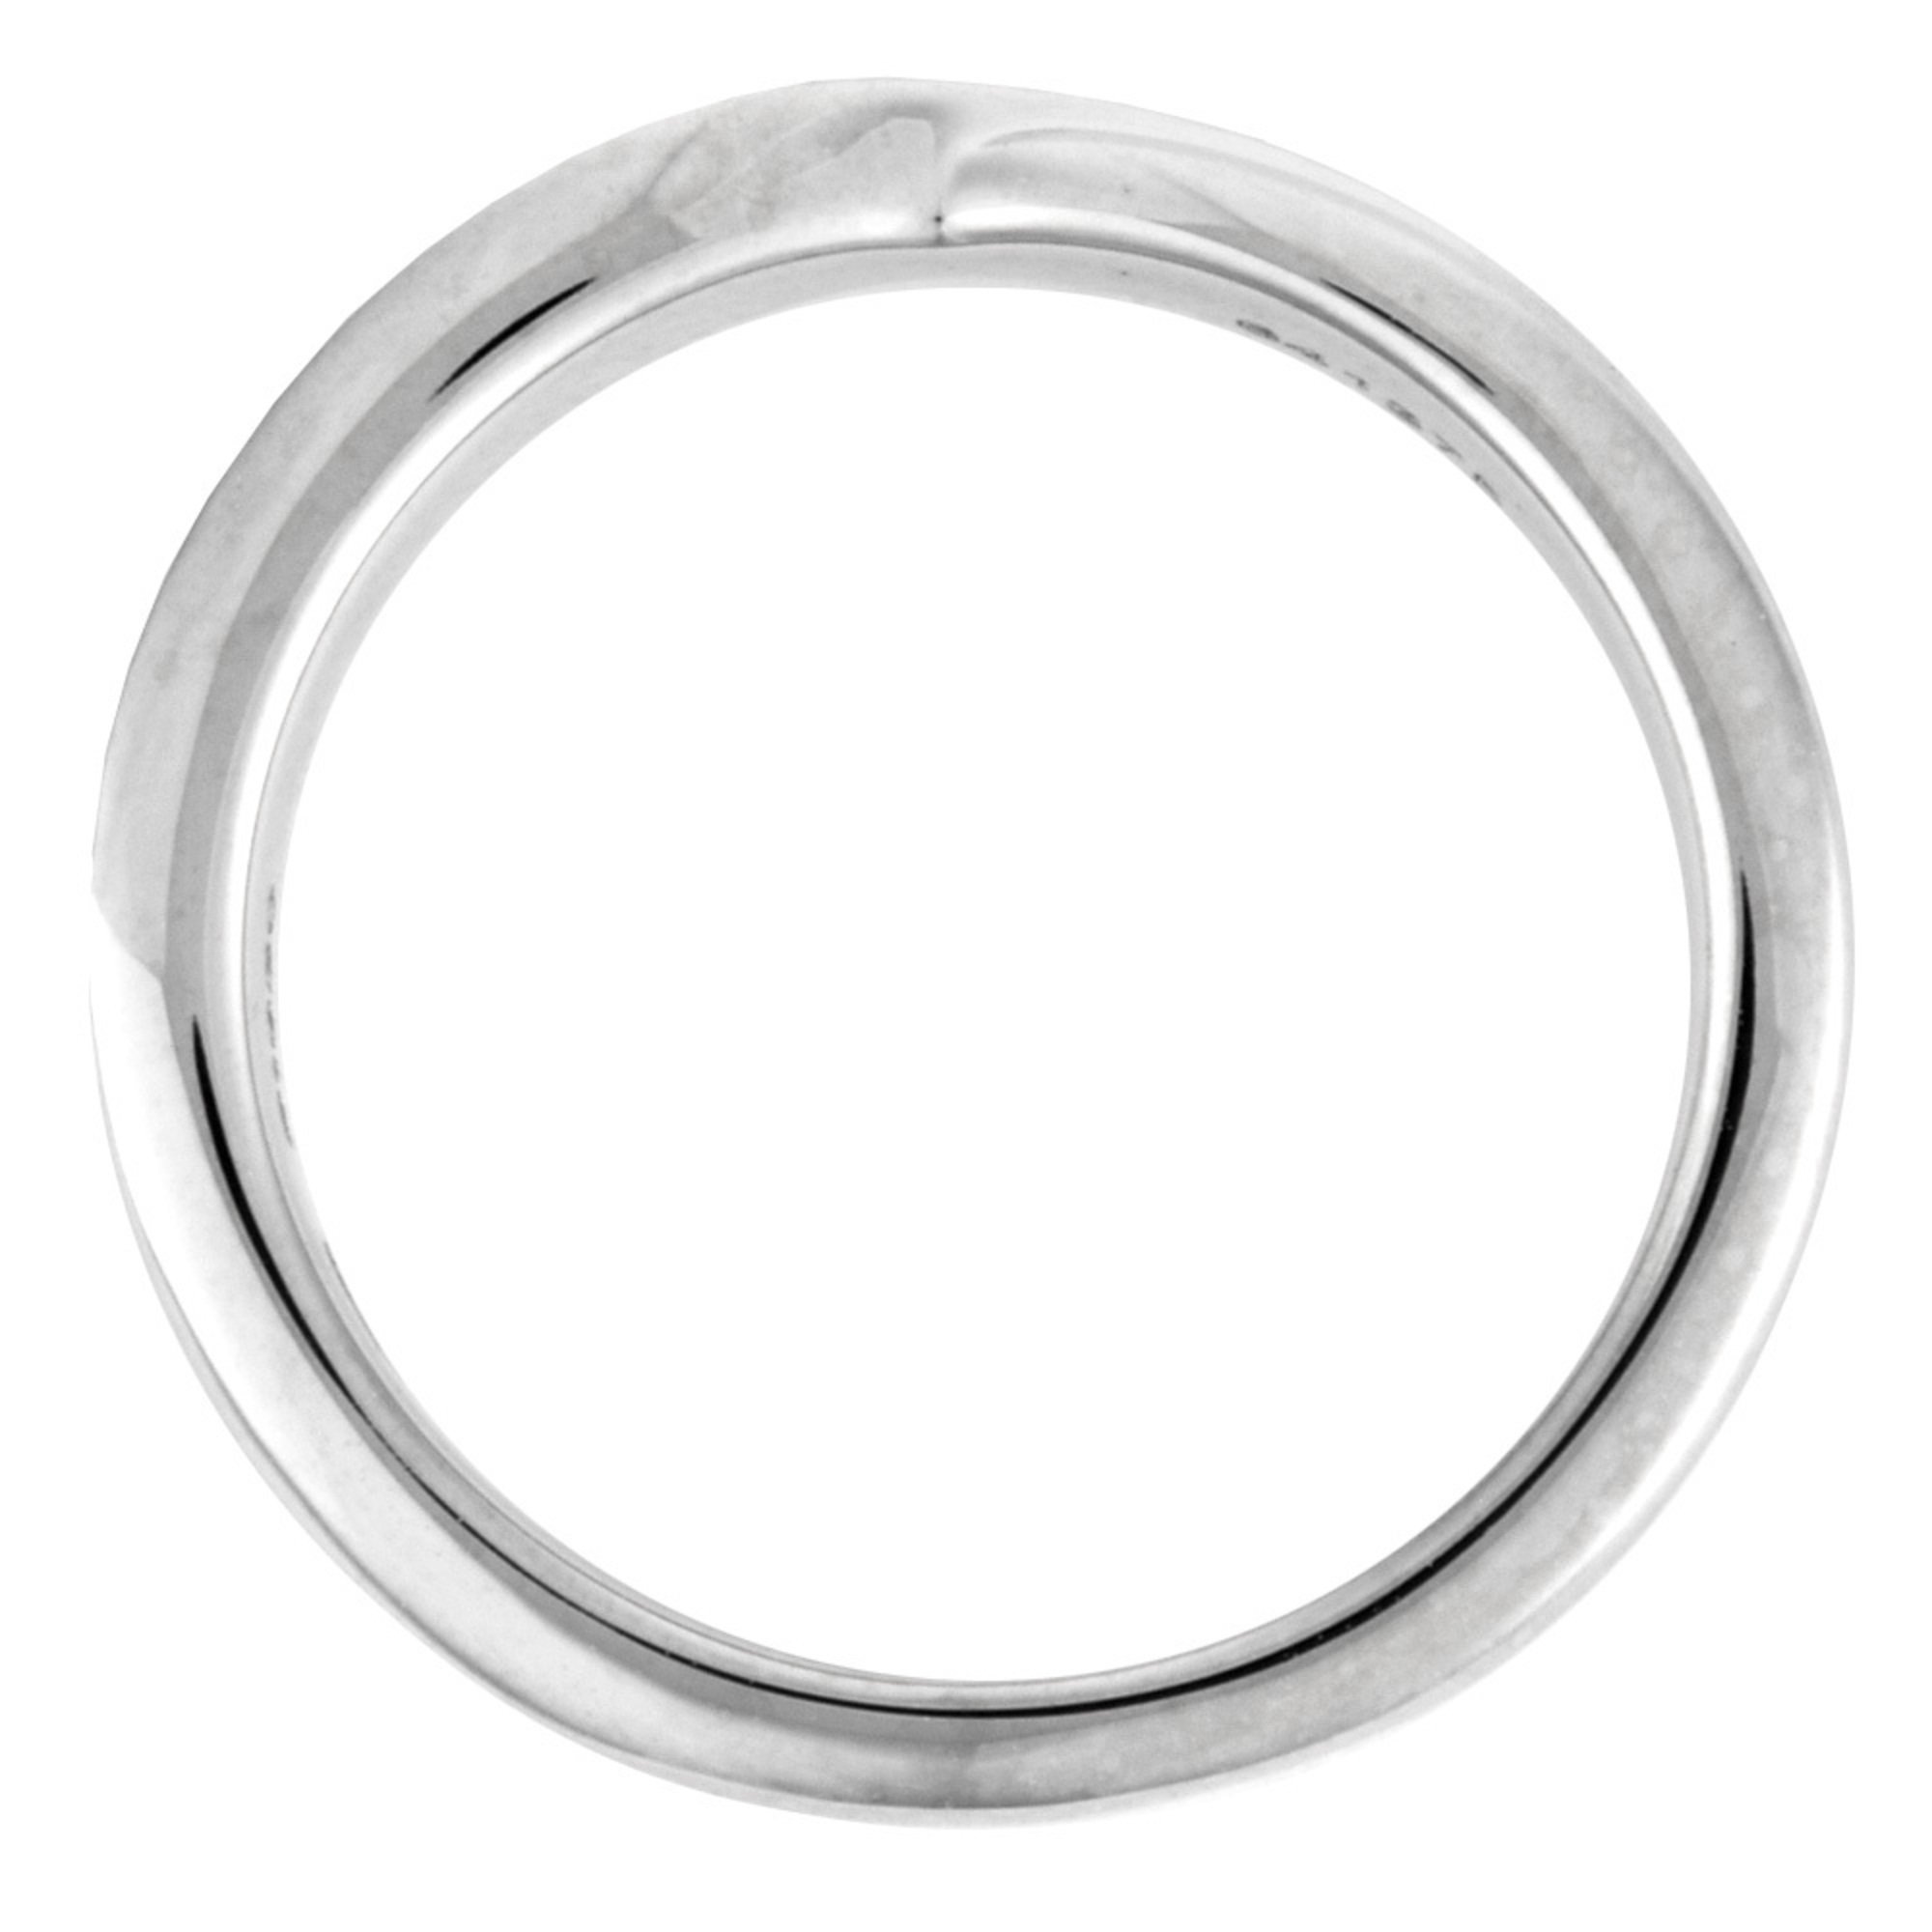 Harry Winston Trist One Row Band Ring, Diamond, Size 7, Pt950, Women's